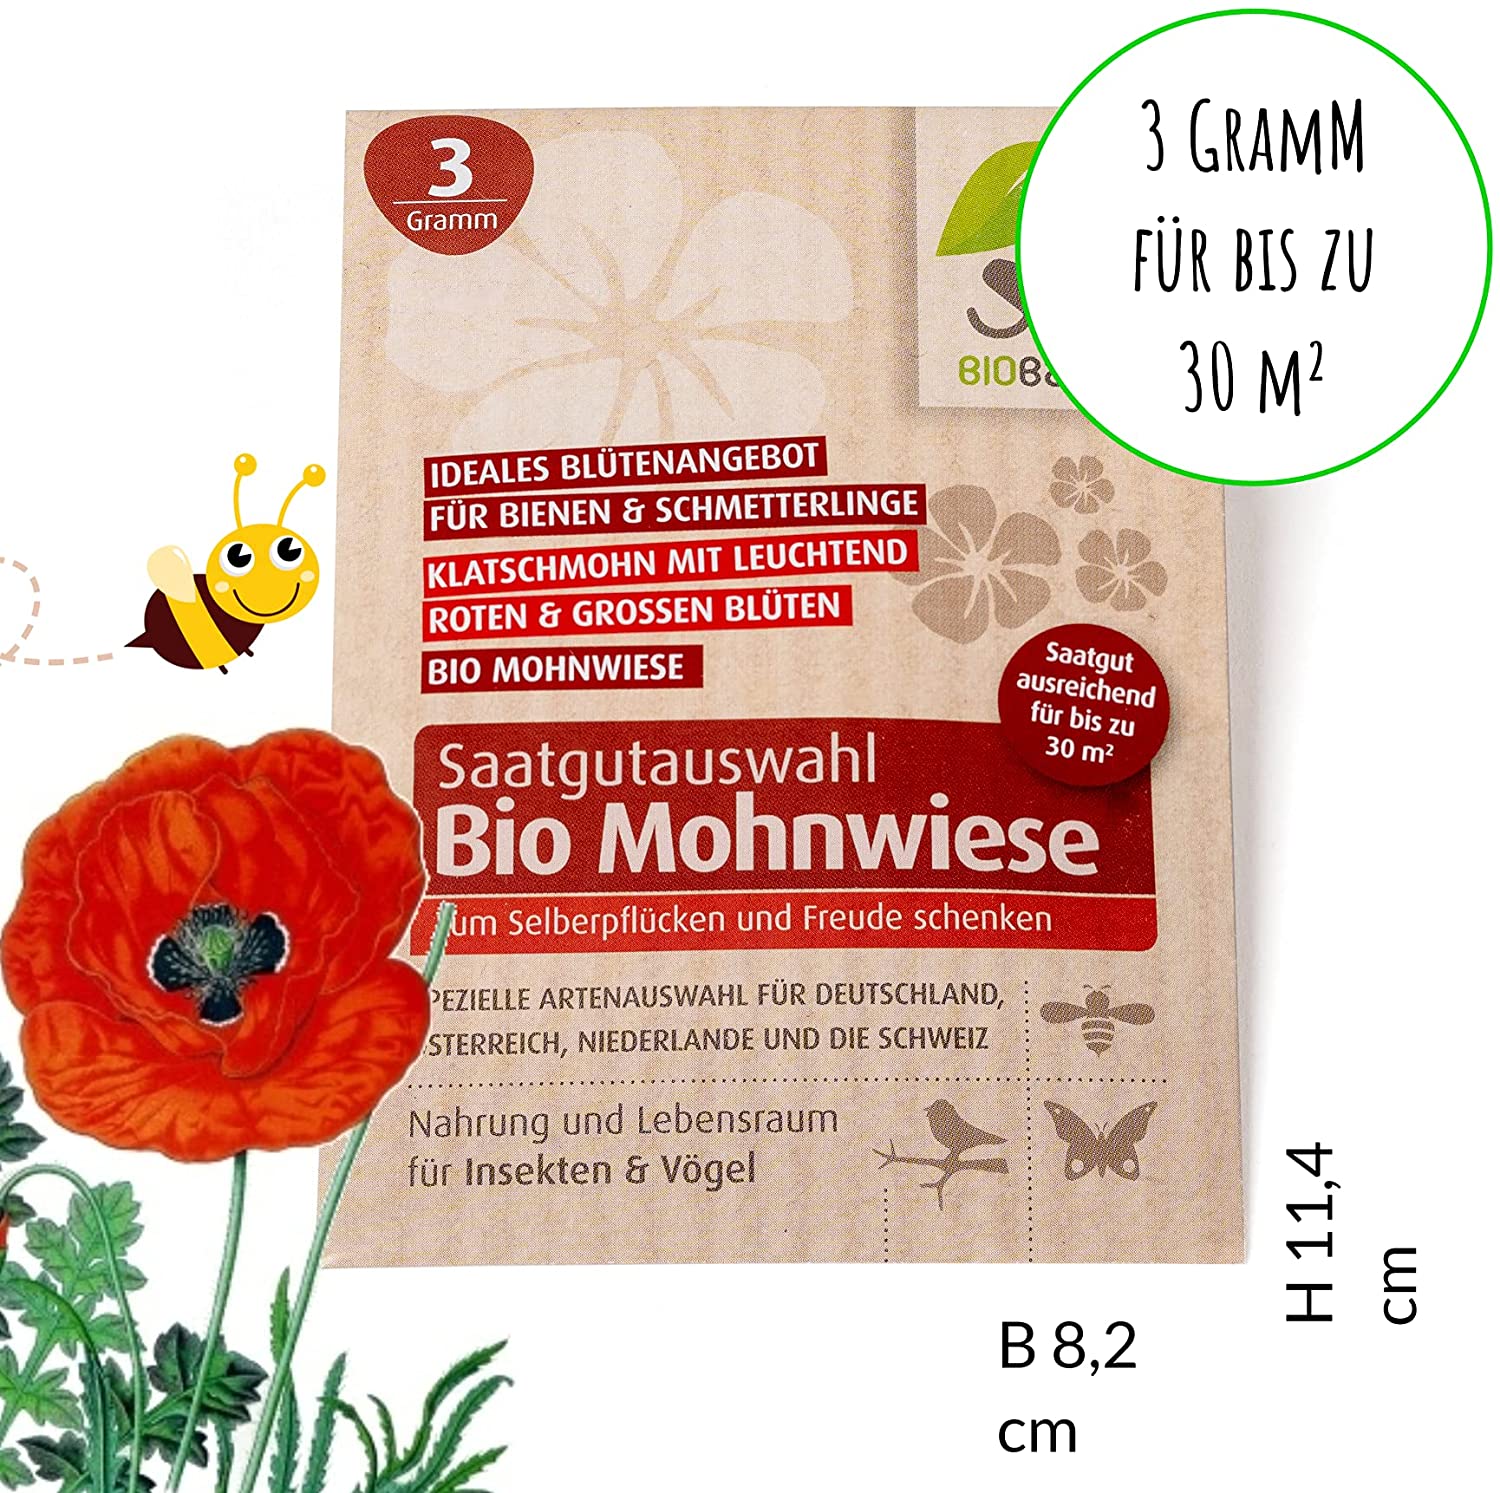 Biobalu Mohnwiese 3g, Klatschmohn Samen für 30 qm